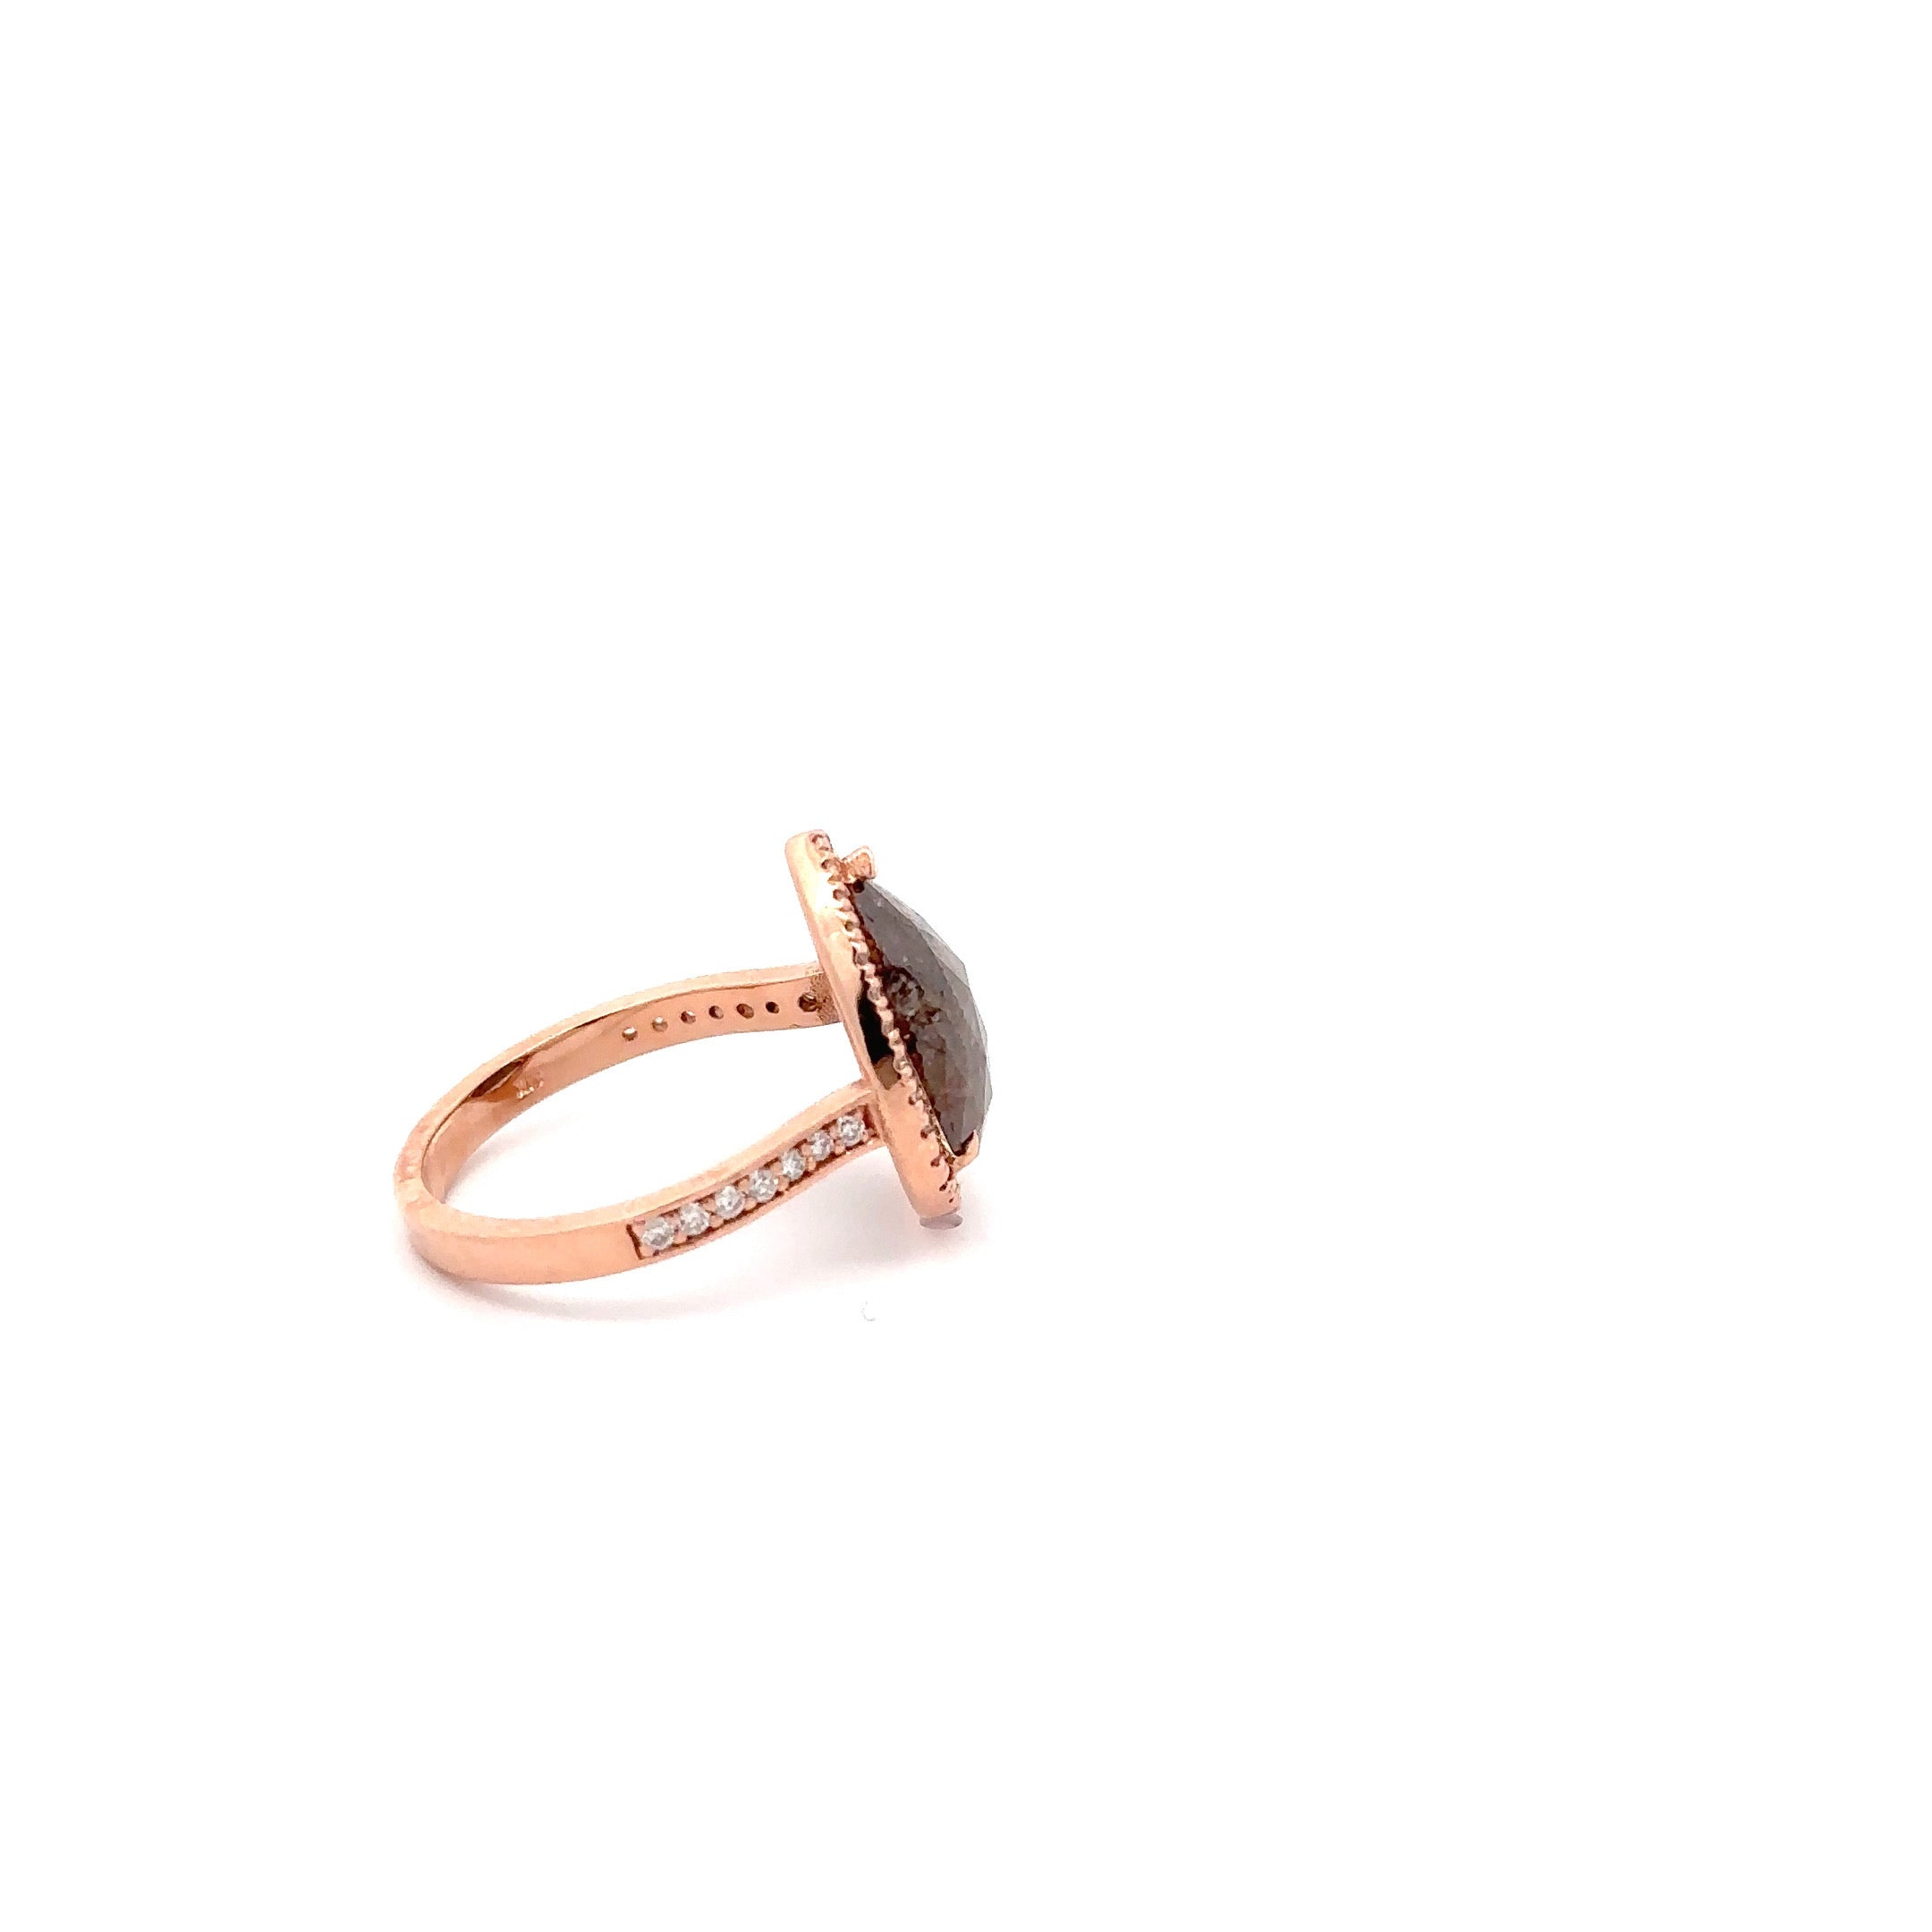 WD1124 14kt Pear shape, Rose Cut, Raw Diamond Ring